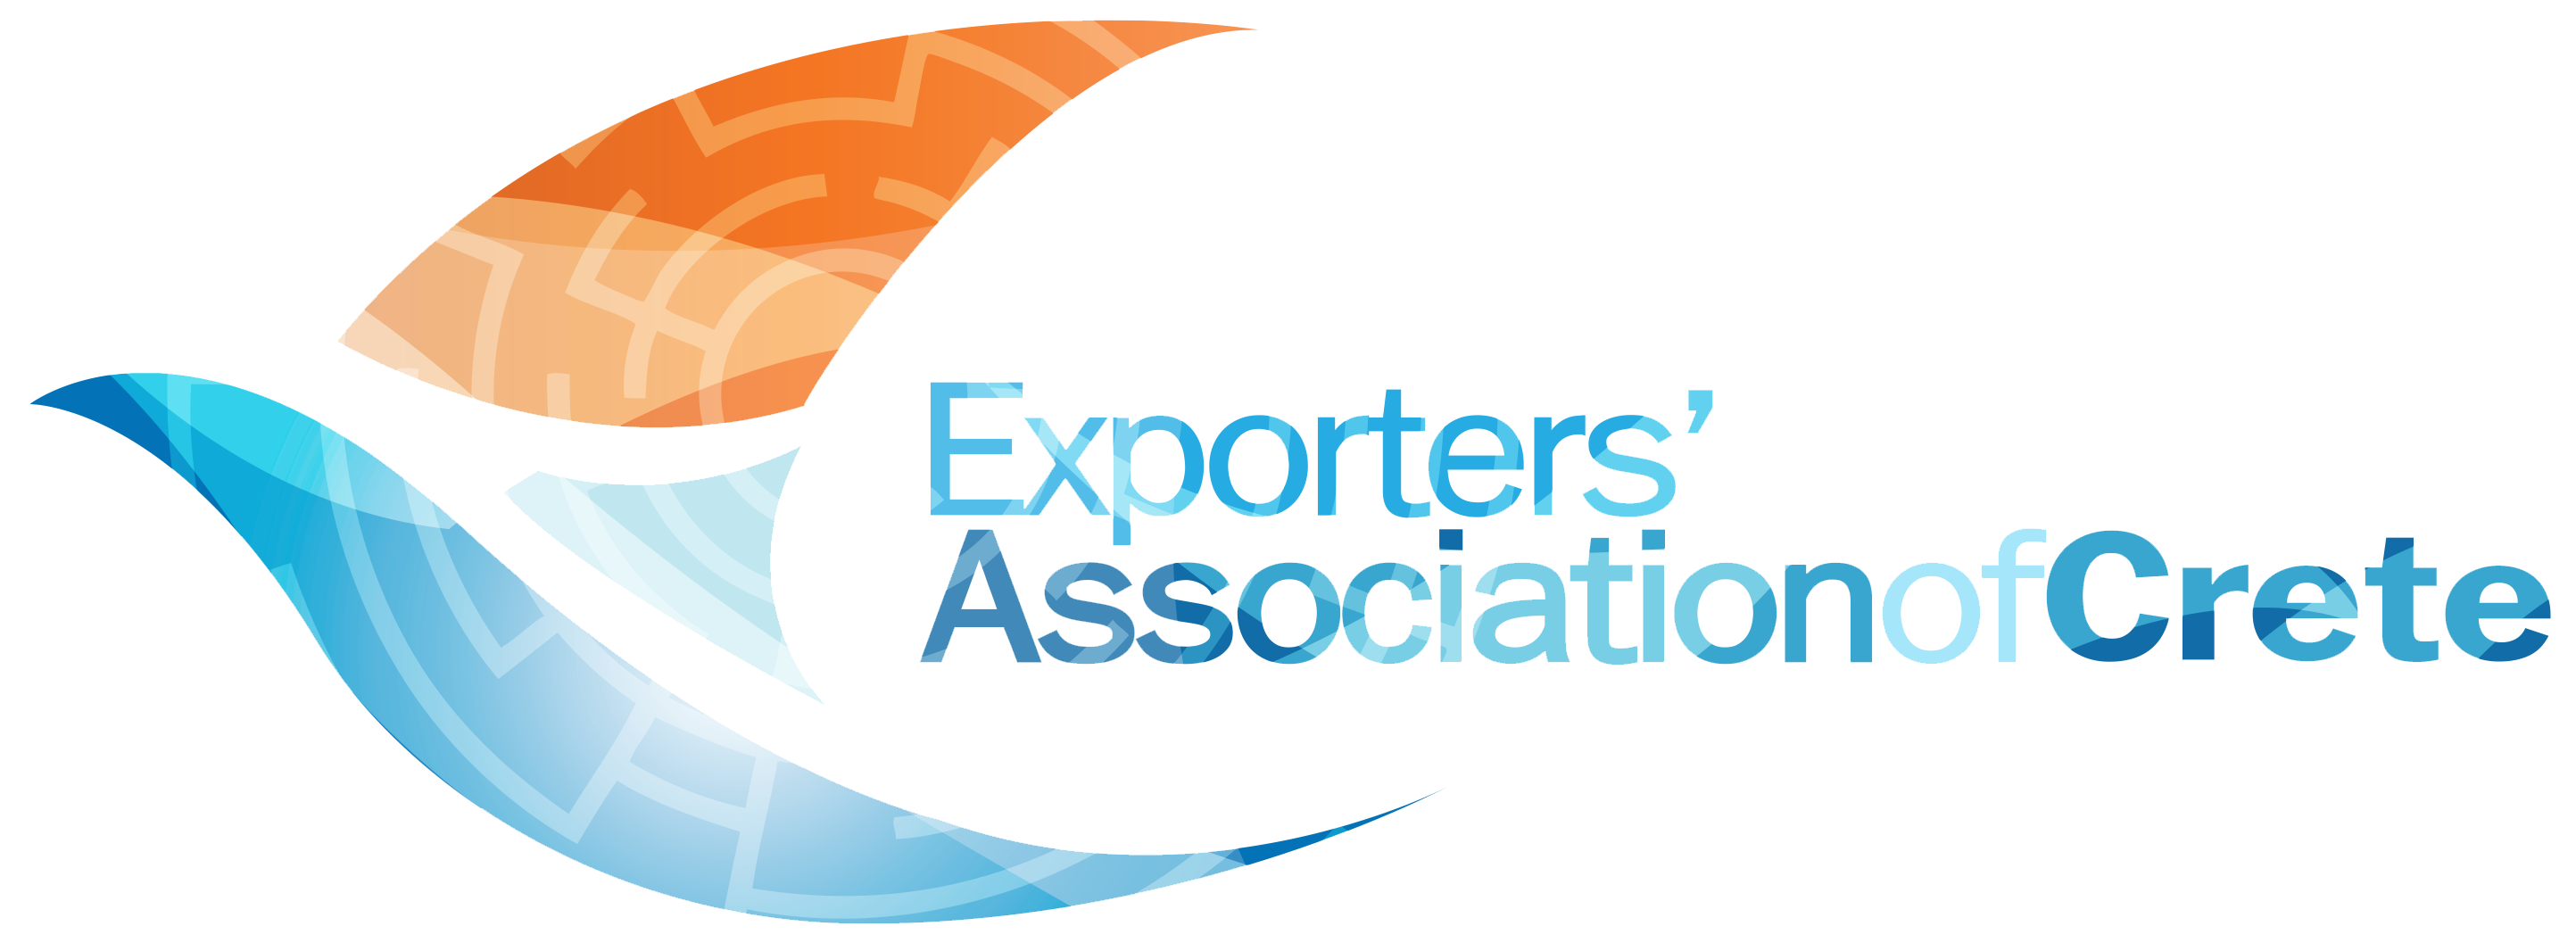 Exporters Association of Crete